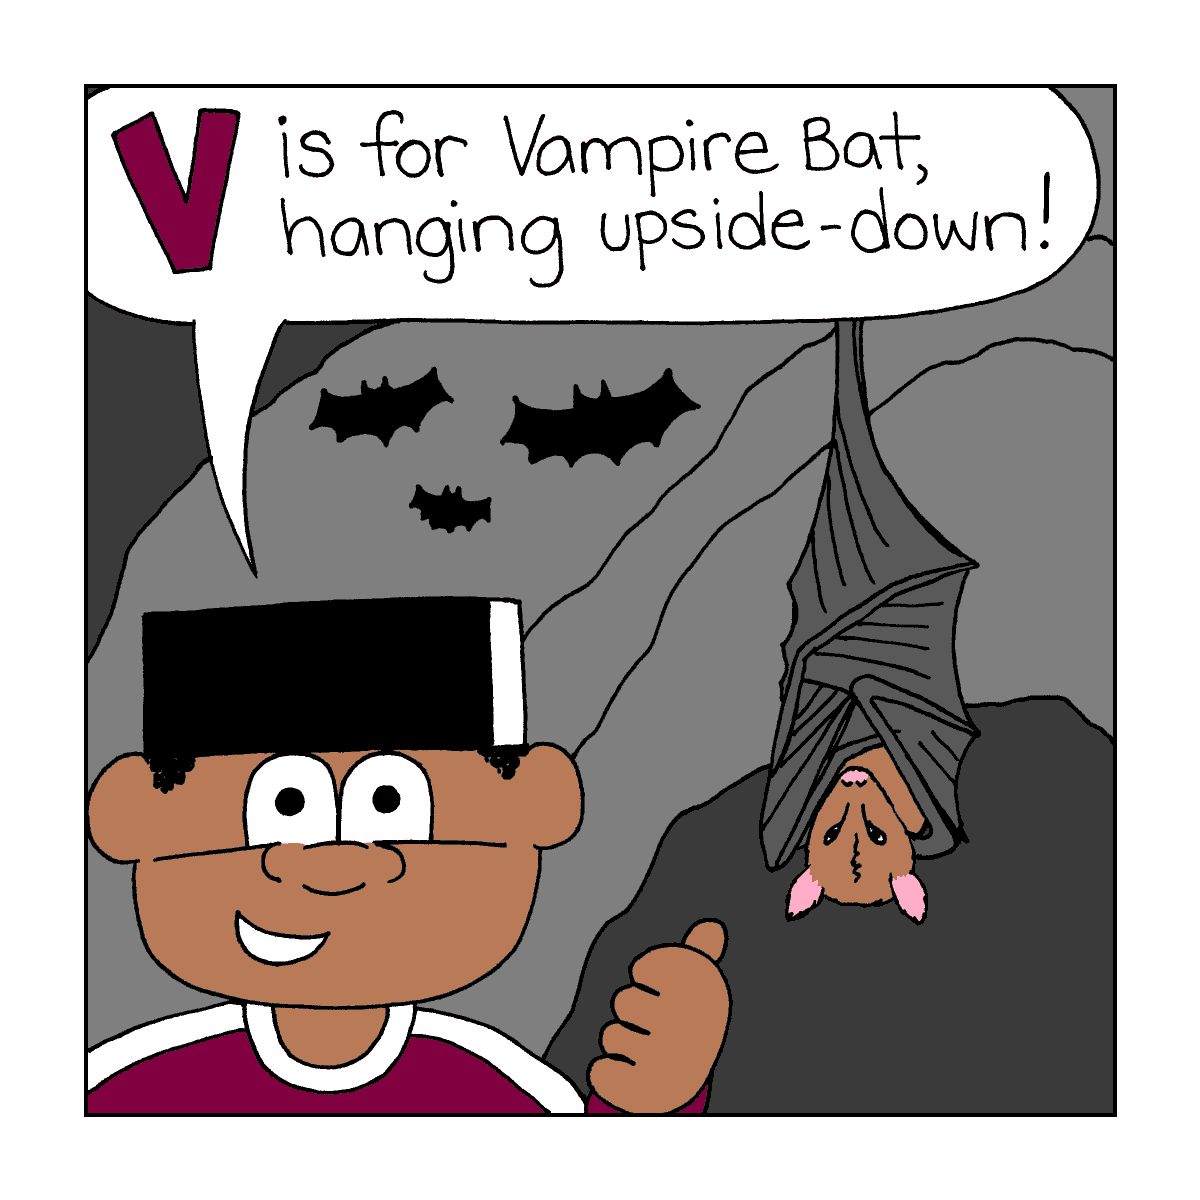 V is for Vampire Bat in today's #animalalphabet post! 🦇 #adventuresoflollipop #kids #kidlit #kidlitart #kidscomics #indiecomics